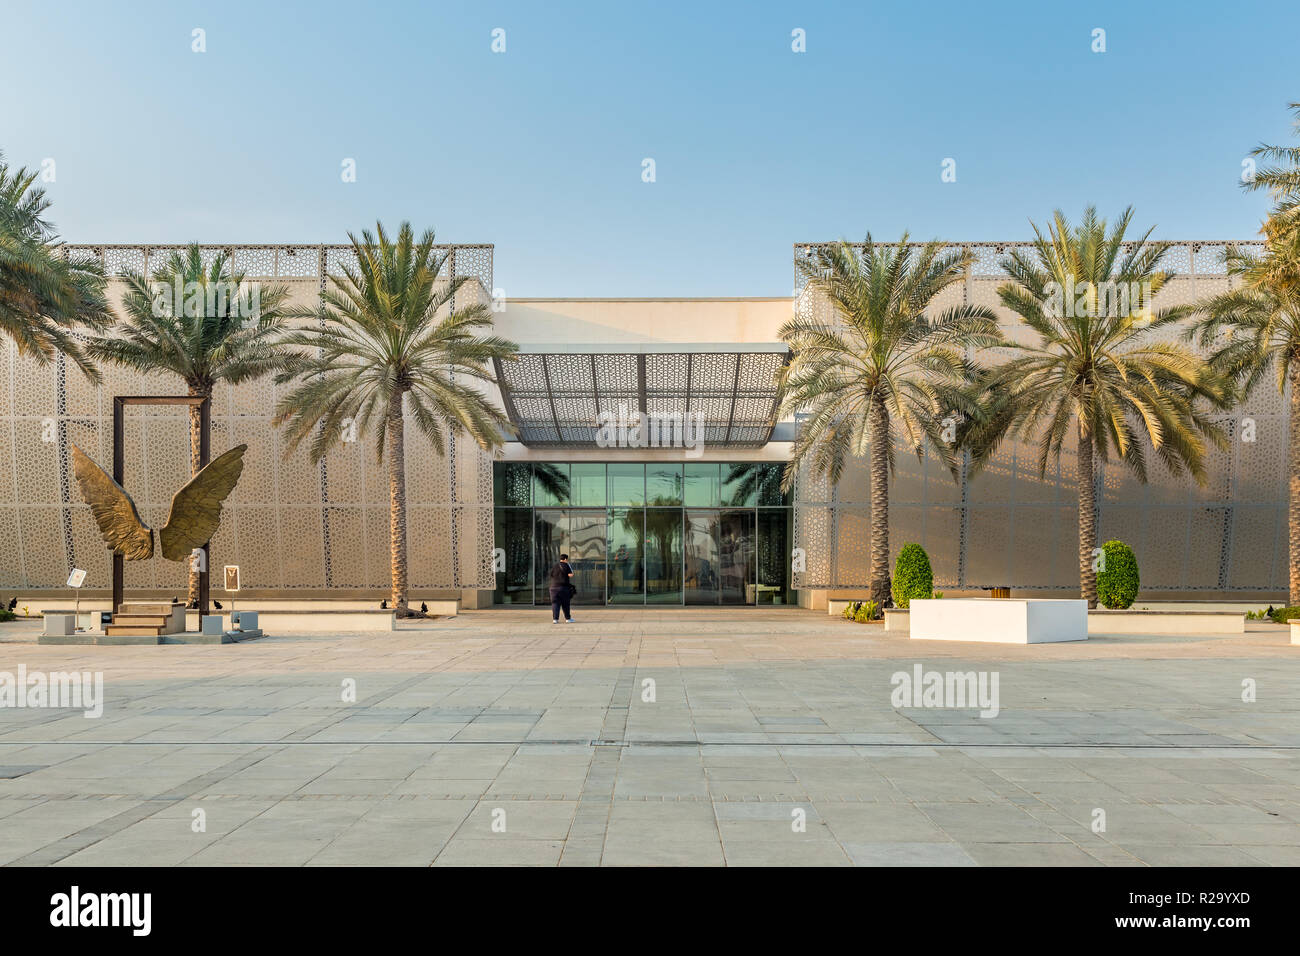 Abu Dhabi, United Arab Emirates, October 7, 2018: Manarat Al Saadiyat. This is a high-tech centre for local and international cultural exhibits. Stock Photo